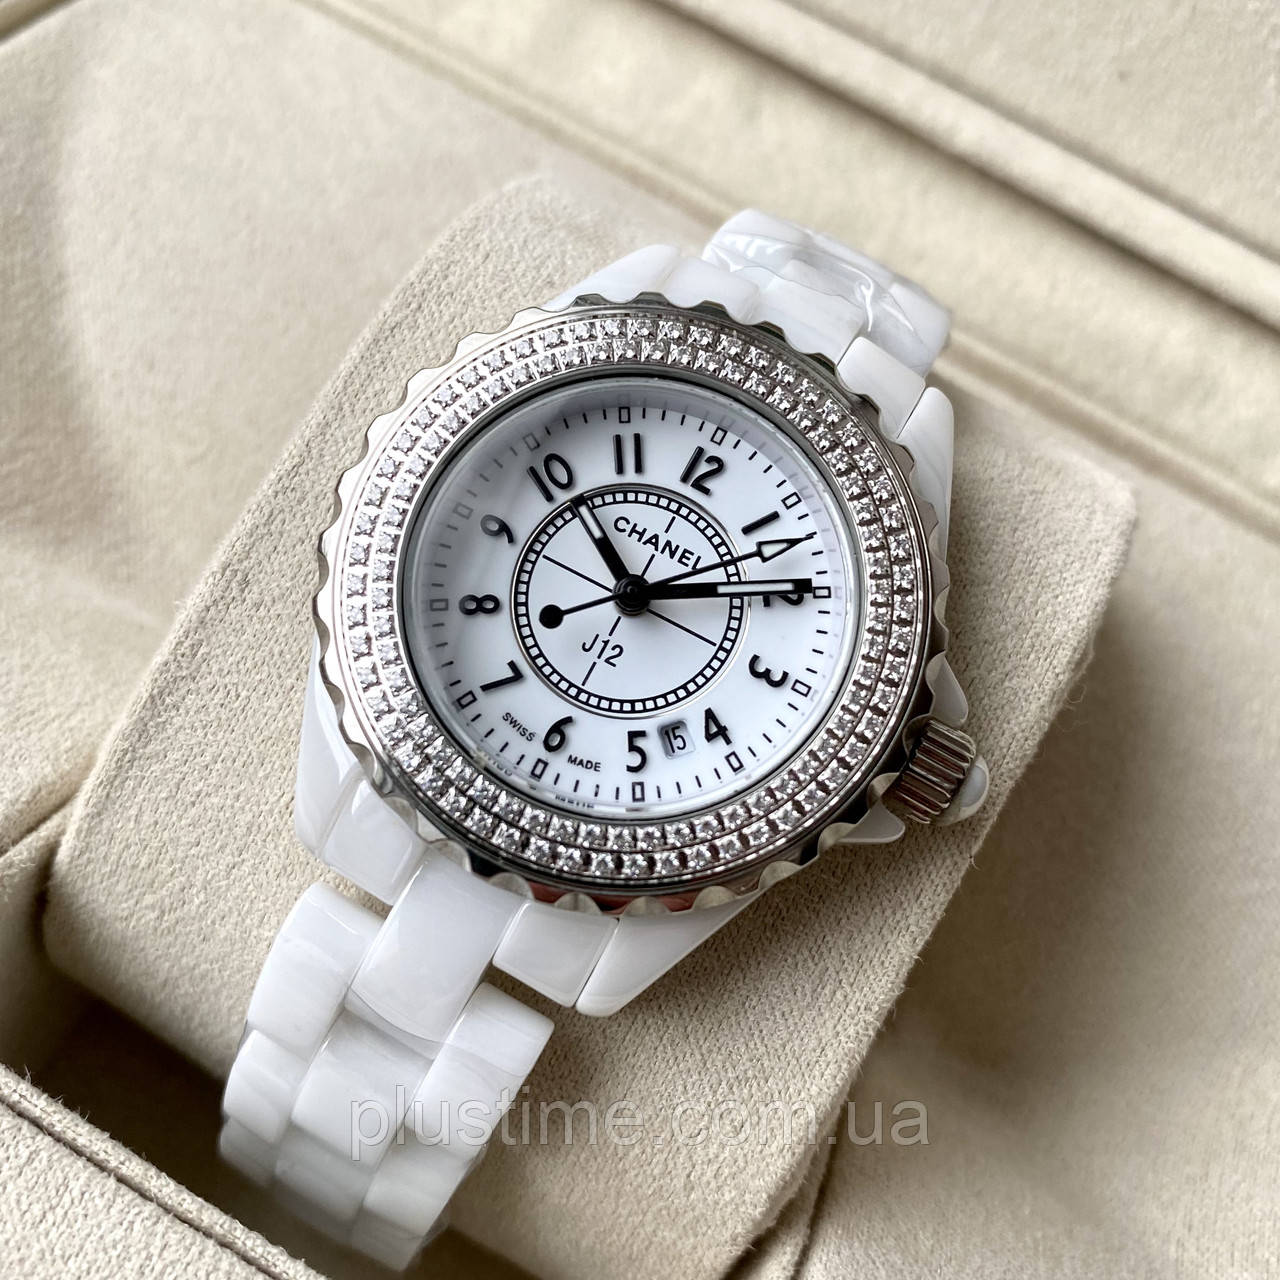 Женские часы Chanel J12 Diamond White кварцевые на керамическом с календарем цена 5400 ₴ — Prom.ua (ID#1867567244)